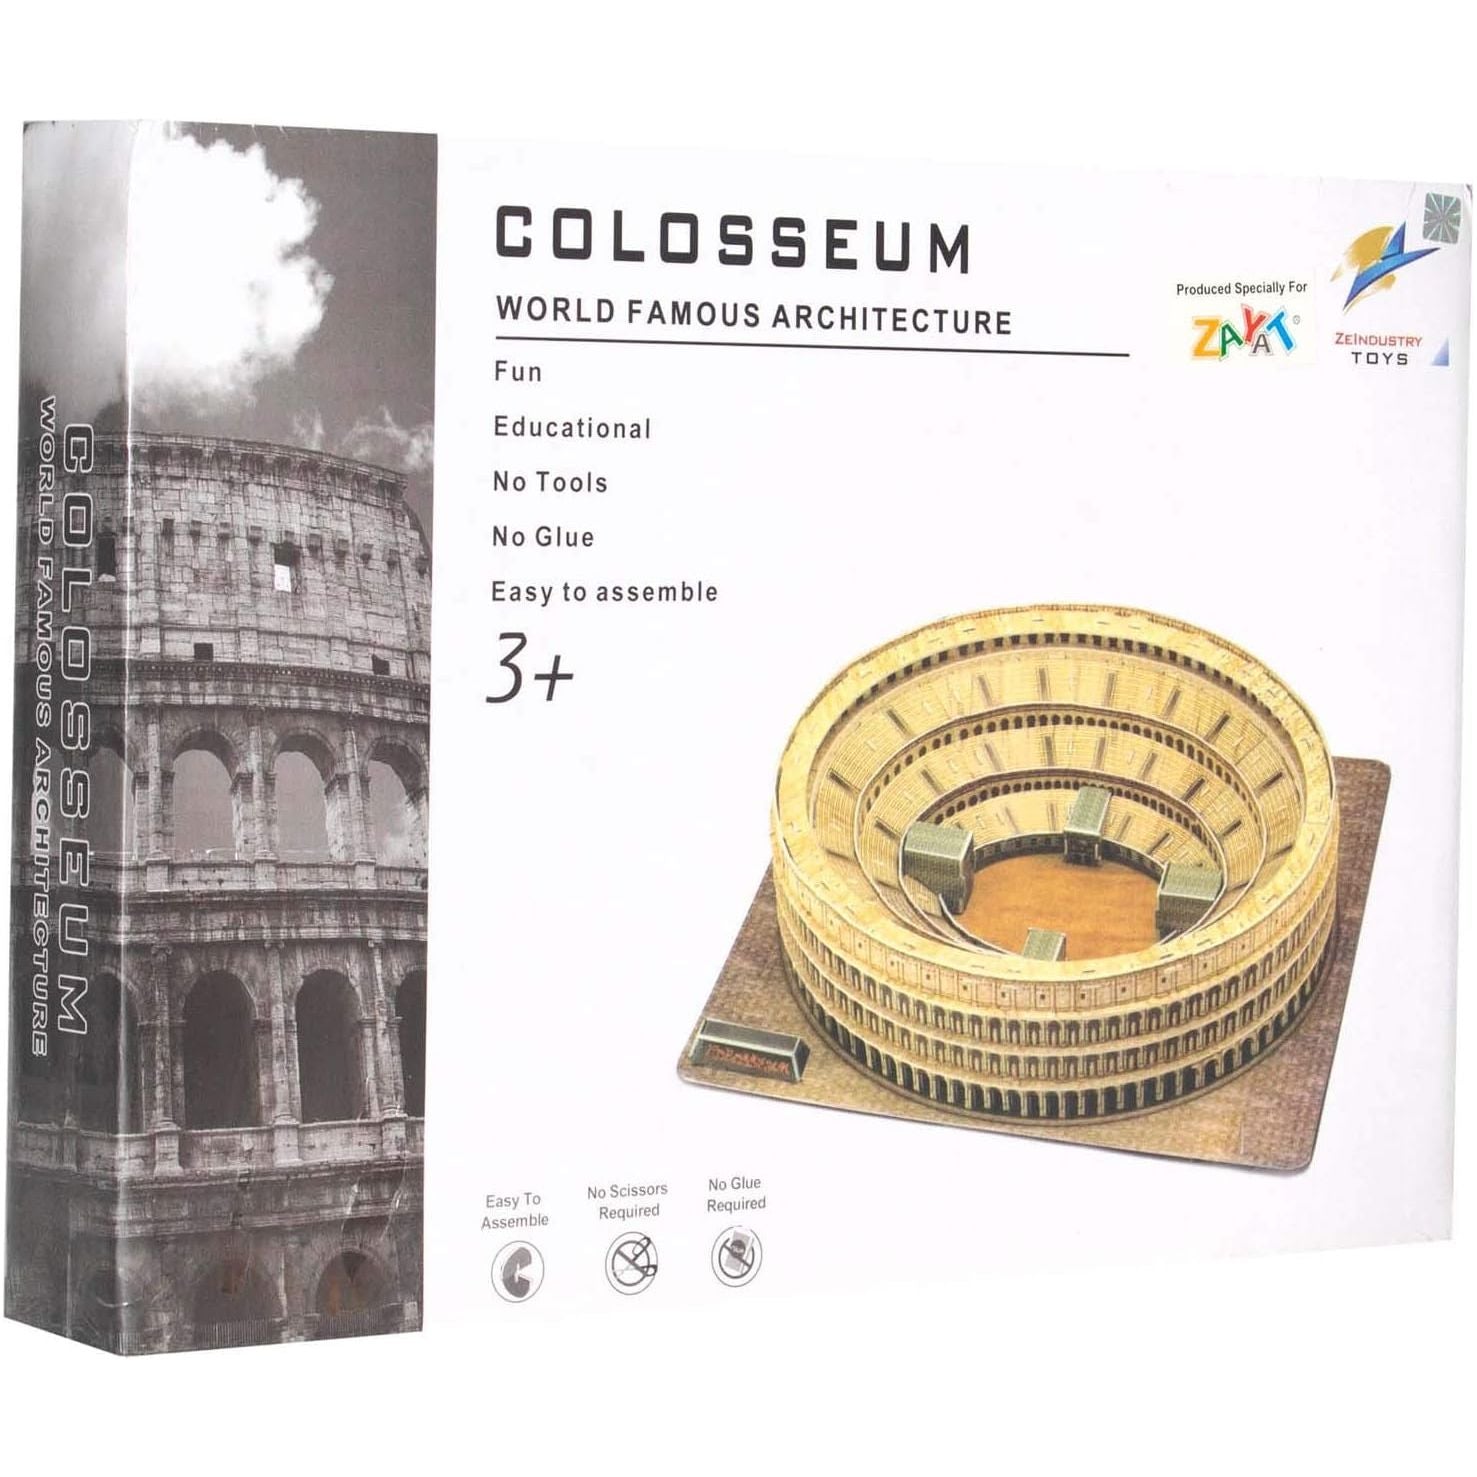 Zeindustry Toys 3D Puzzle for Kids 84 Pieces -  Colosseum